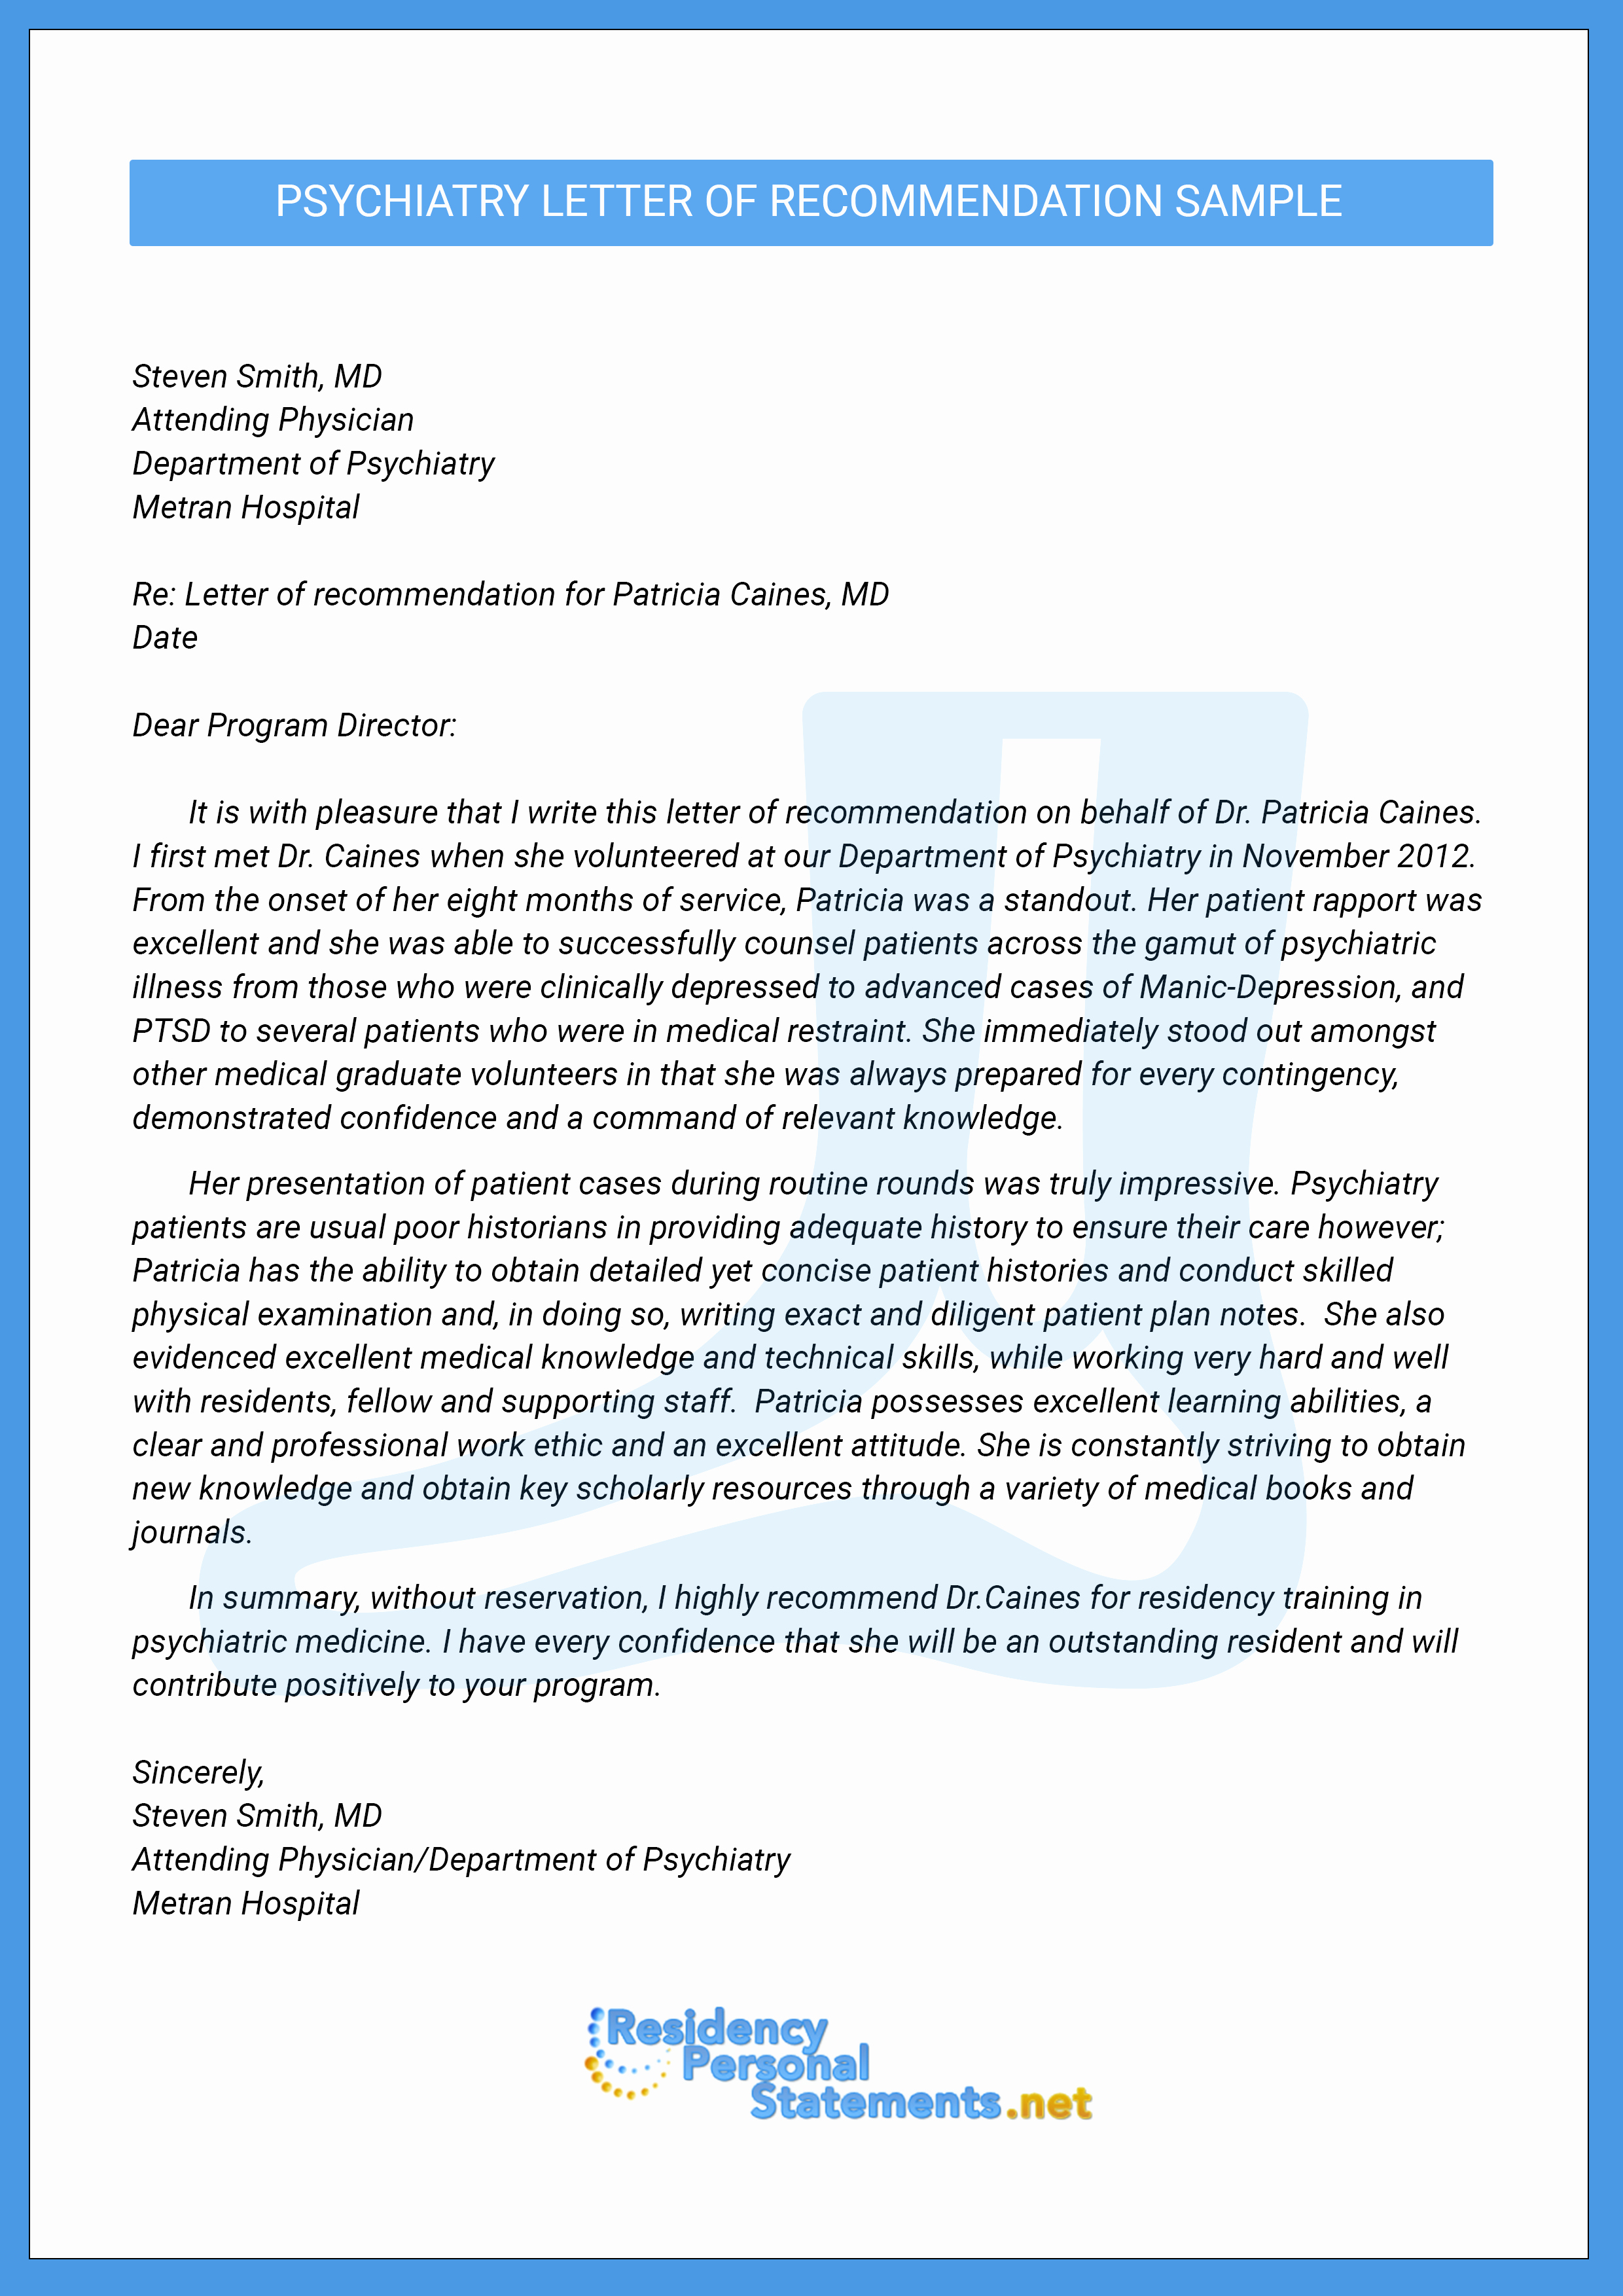 Residency Letter Of Recommendation Sample Luxury Psychiatry Residency Letter Of Re Mendation Sample